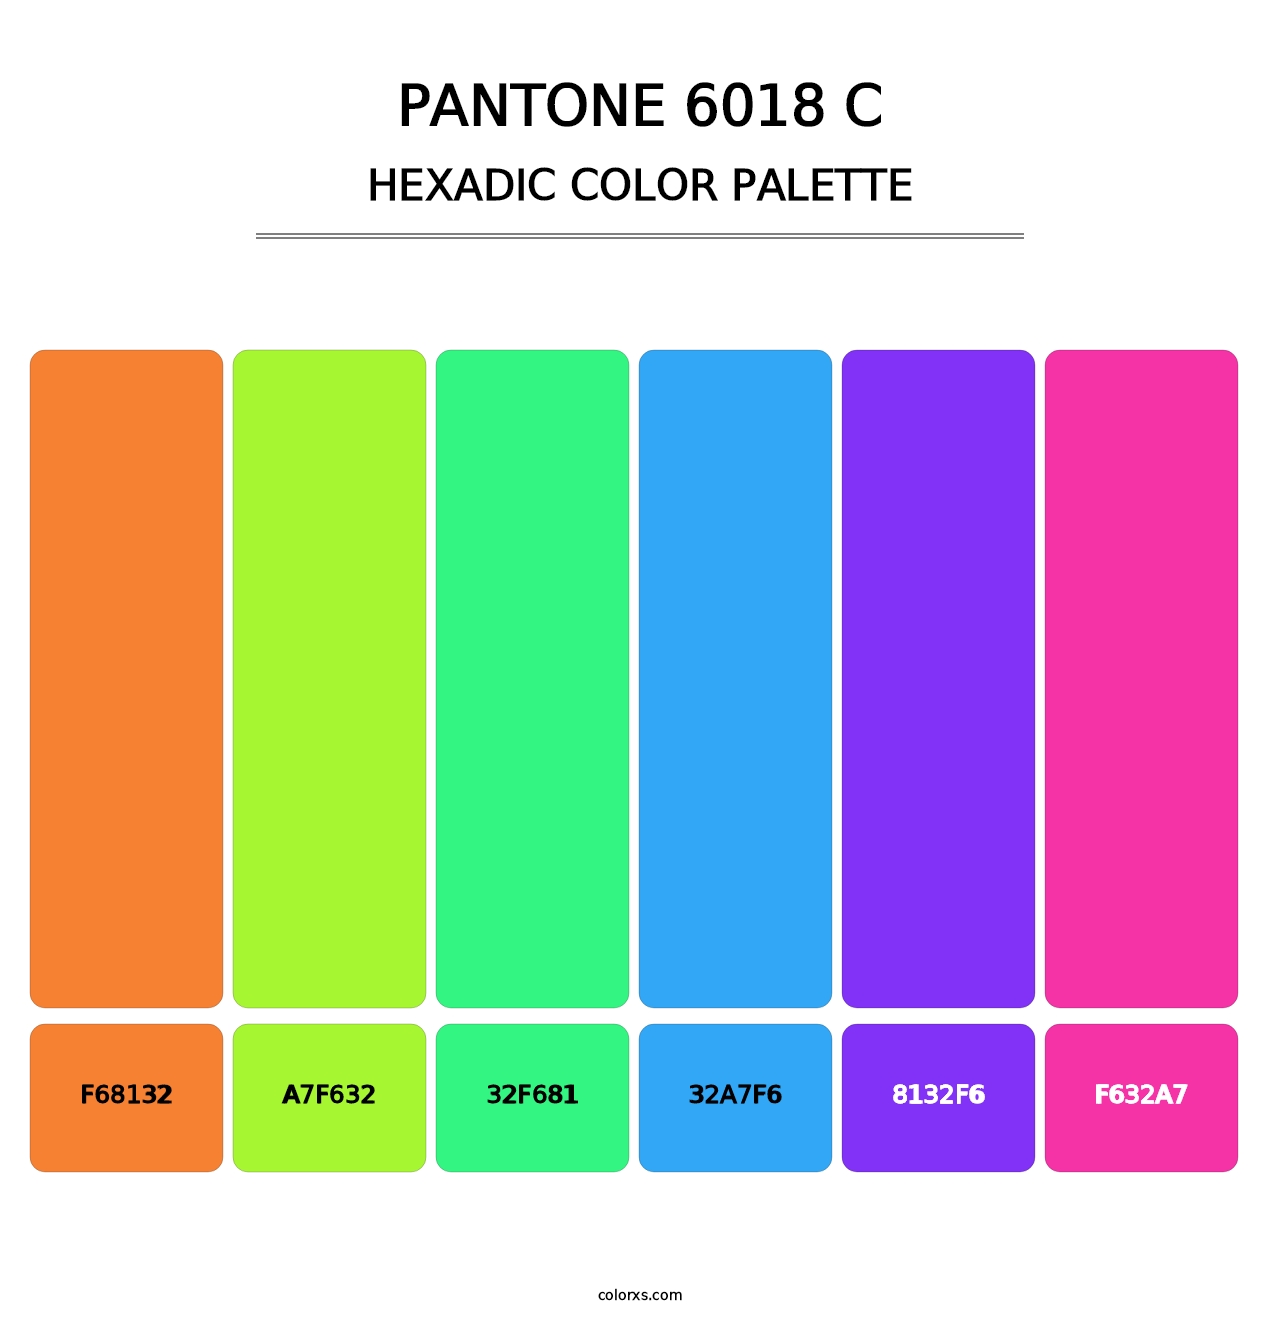 PANTONE 6018 C - Hexadic Color Palette